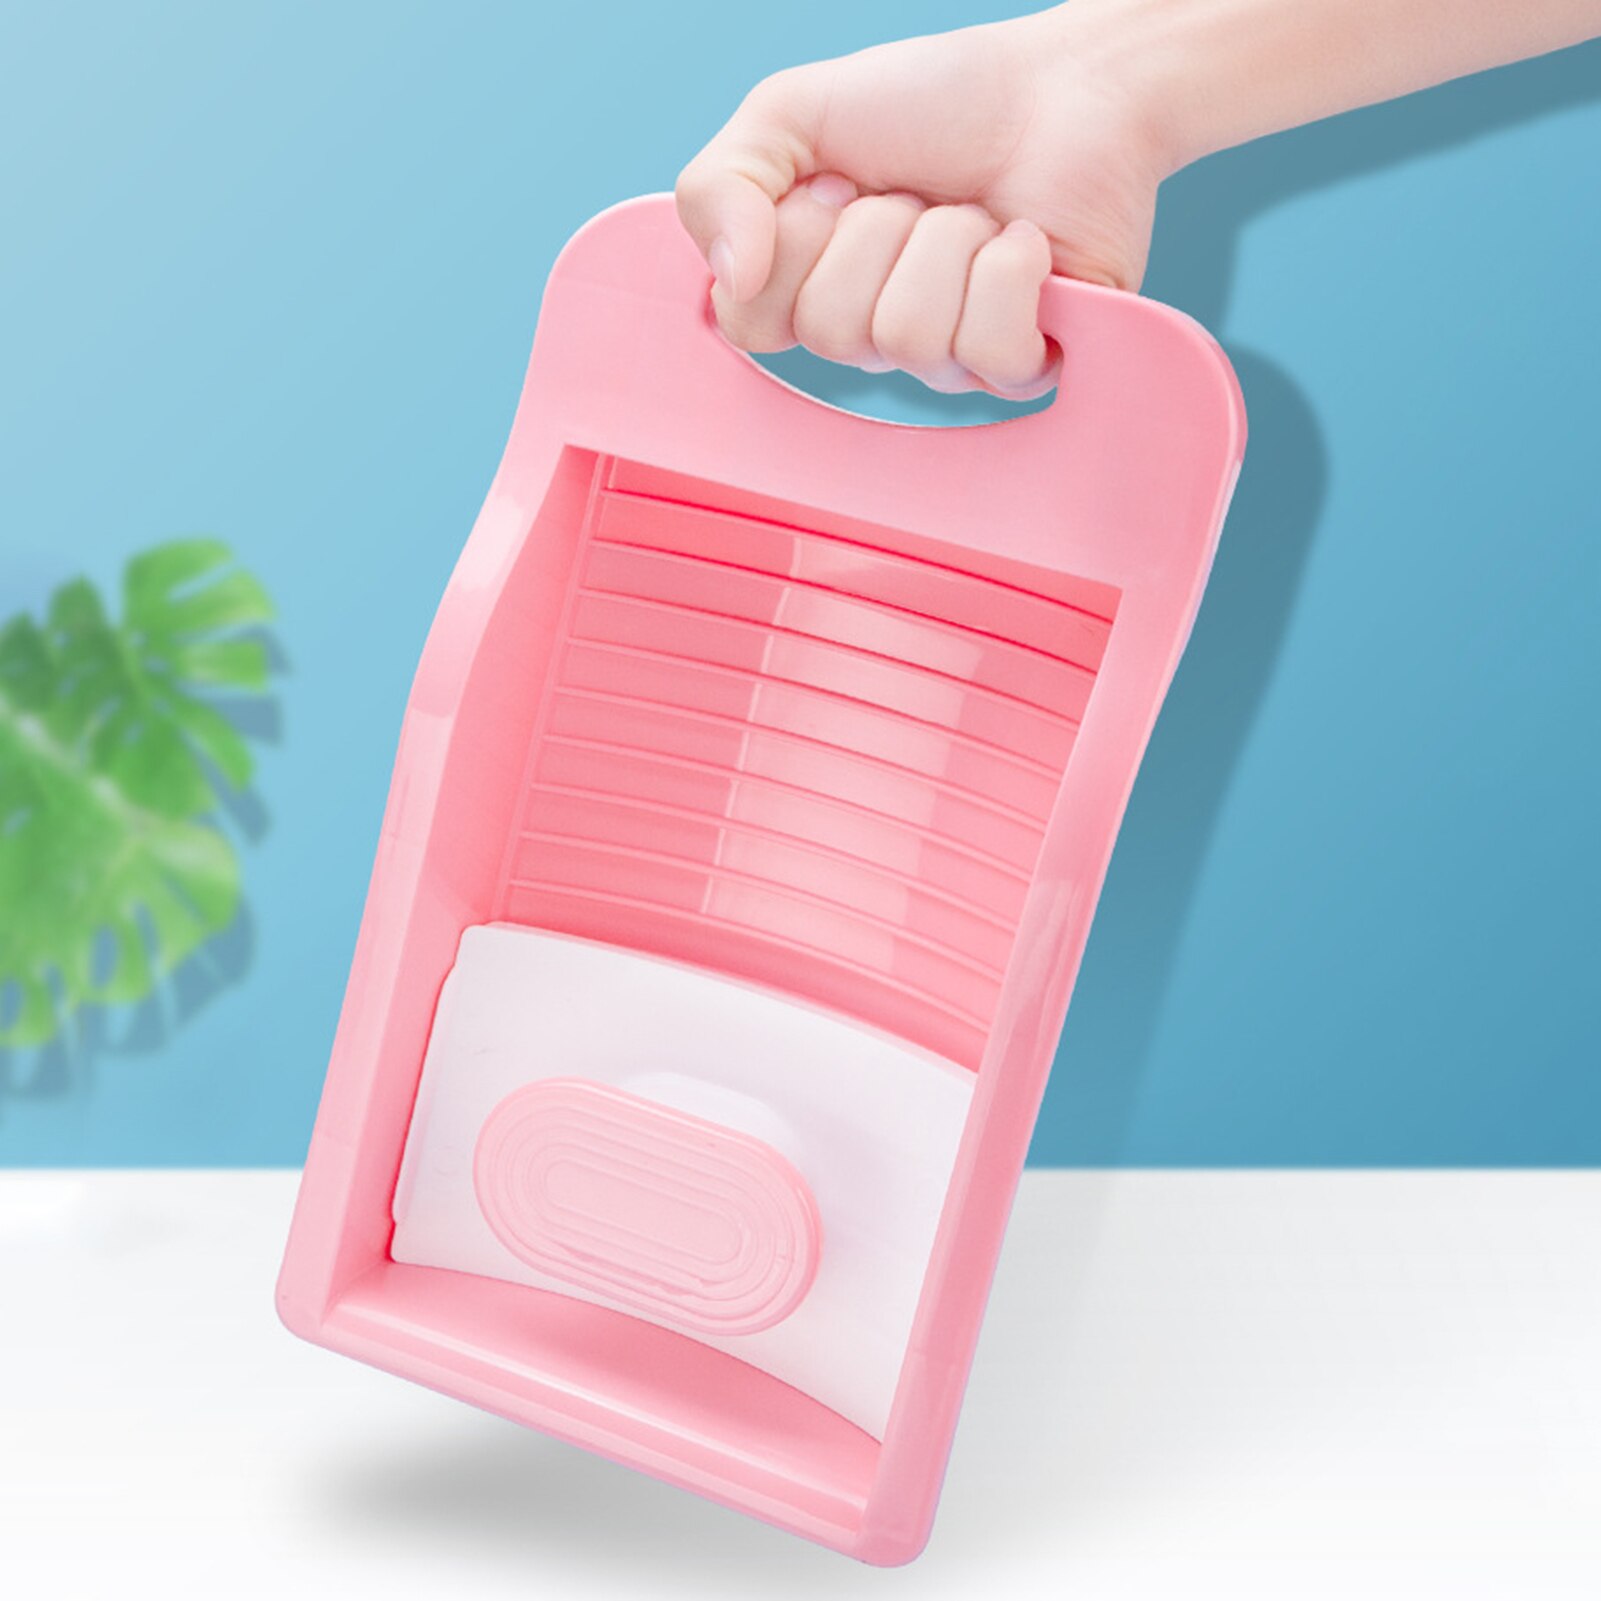 Kleding Wasbord Mini Portable Antislip Huishoudenwashing Board Voor Slaapzaal Studenten Ondergoed Wassen